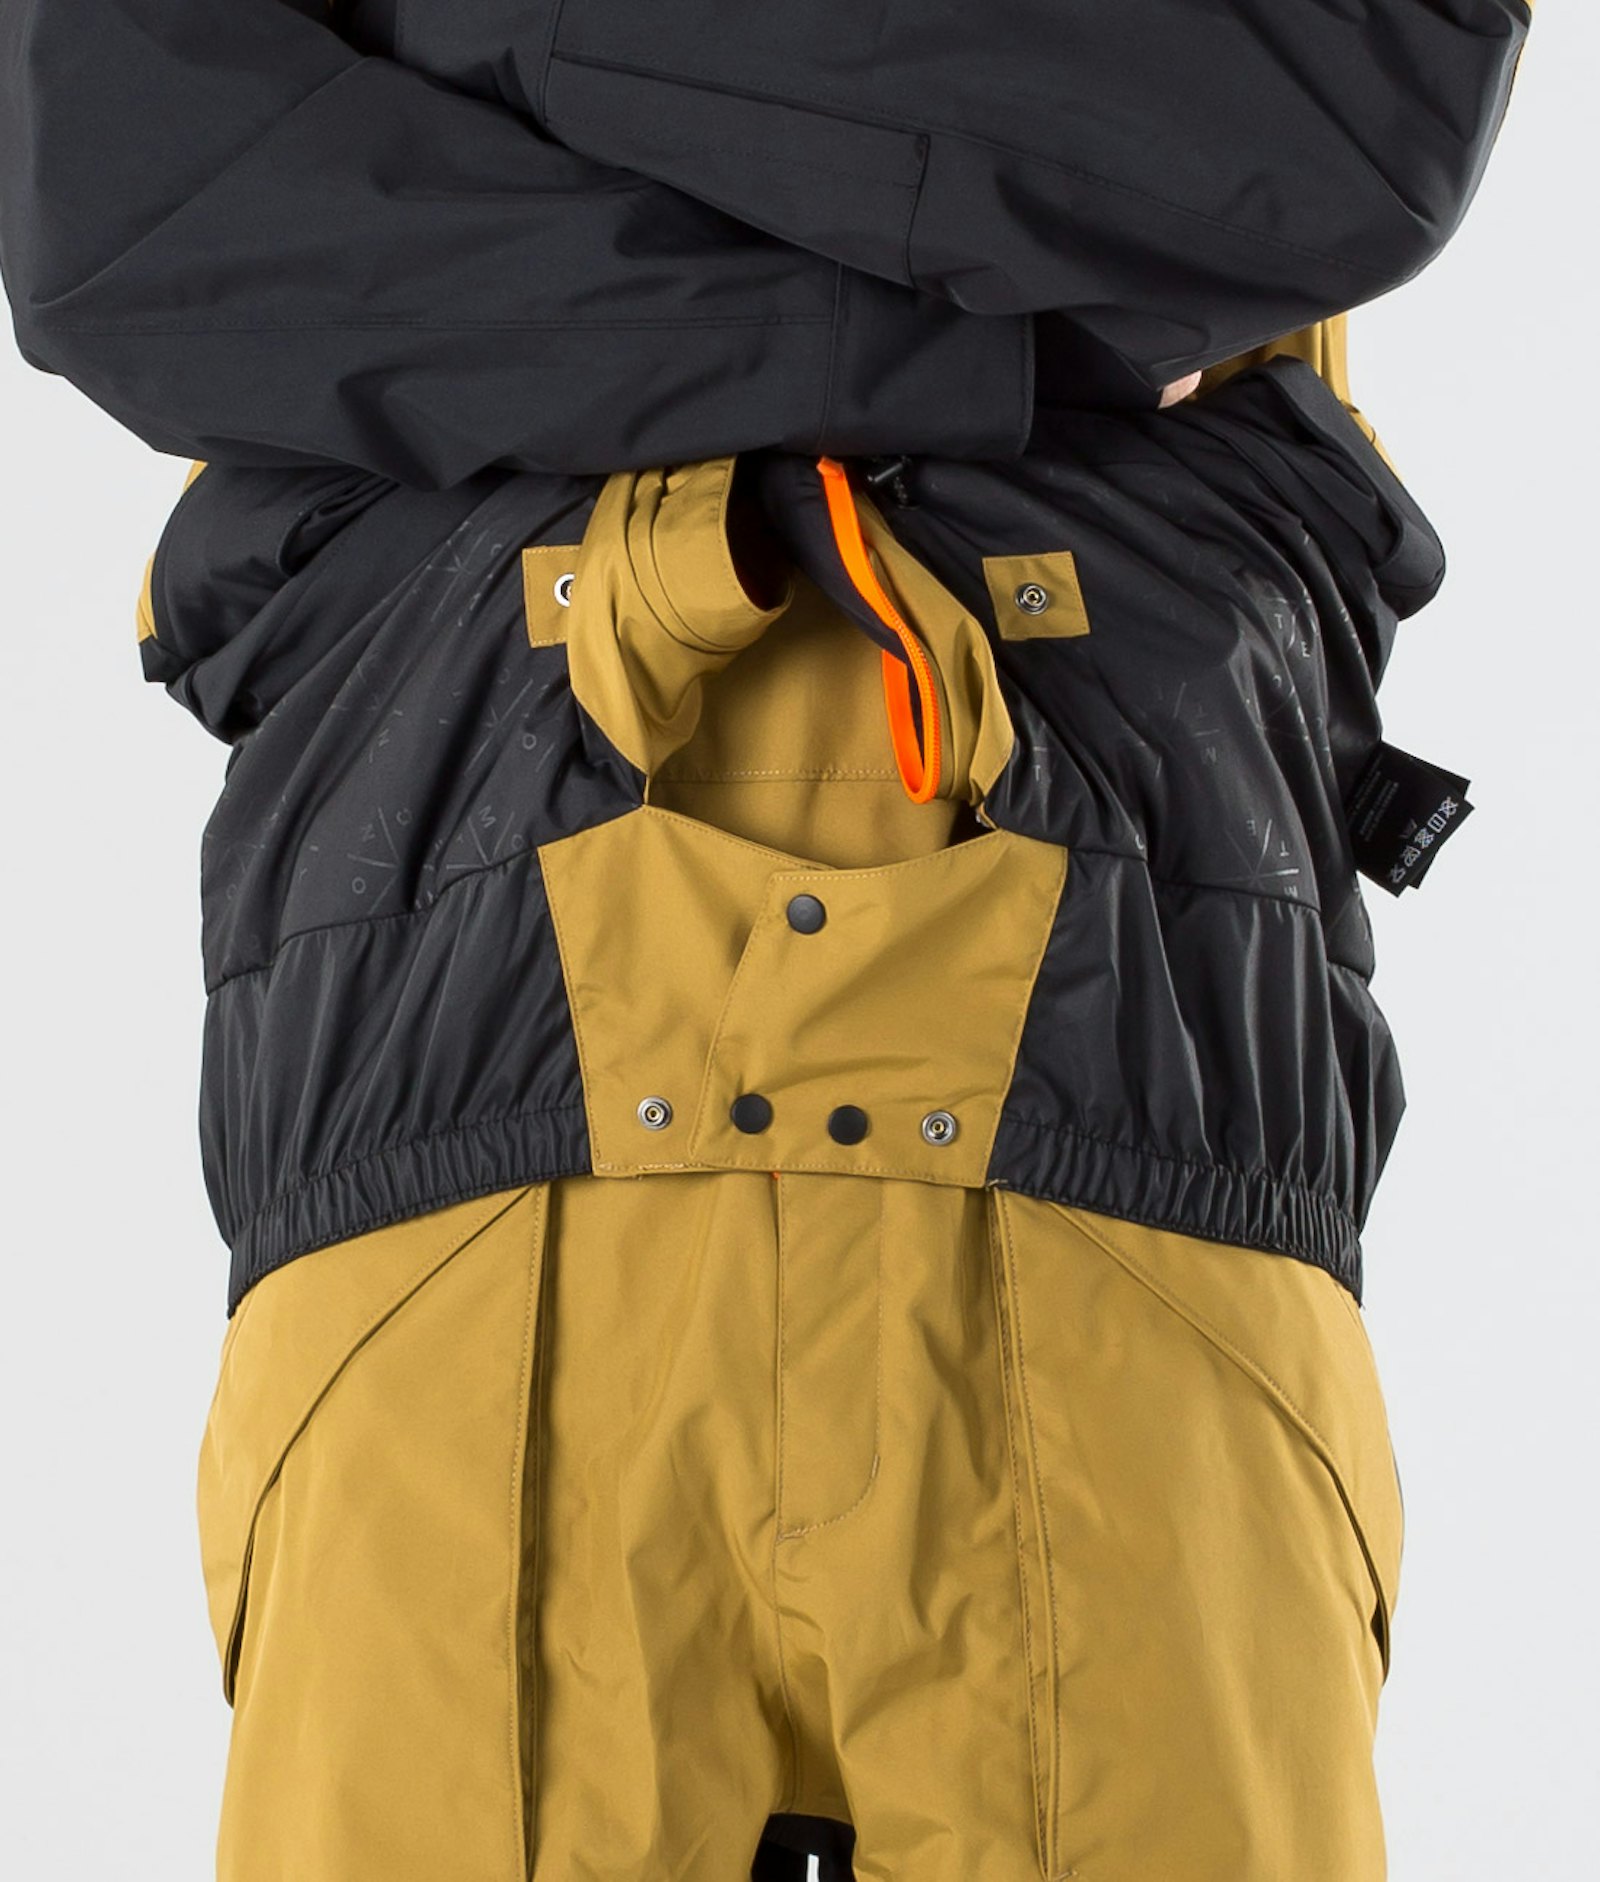 Montec Fenix Snowboard Jacket Men Gold/Black